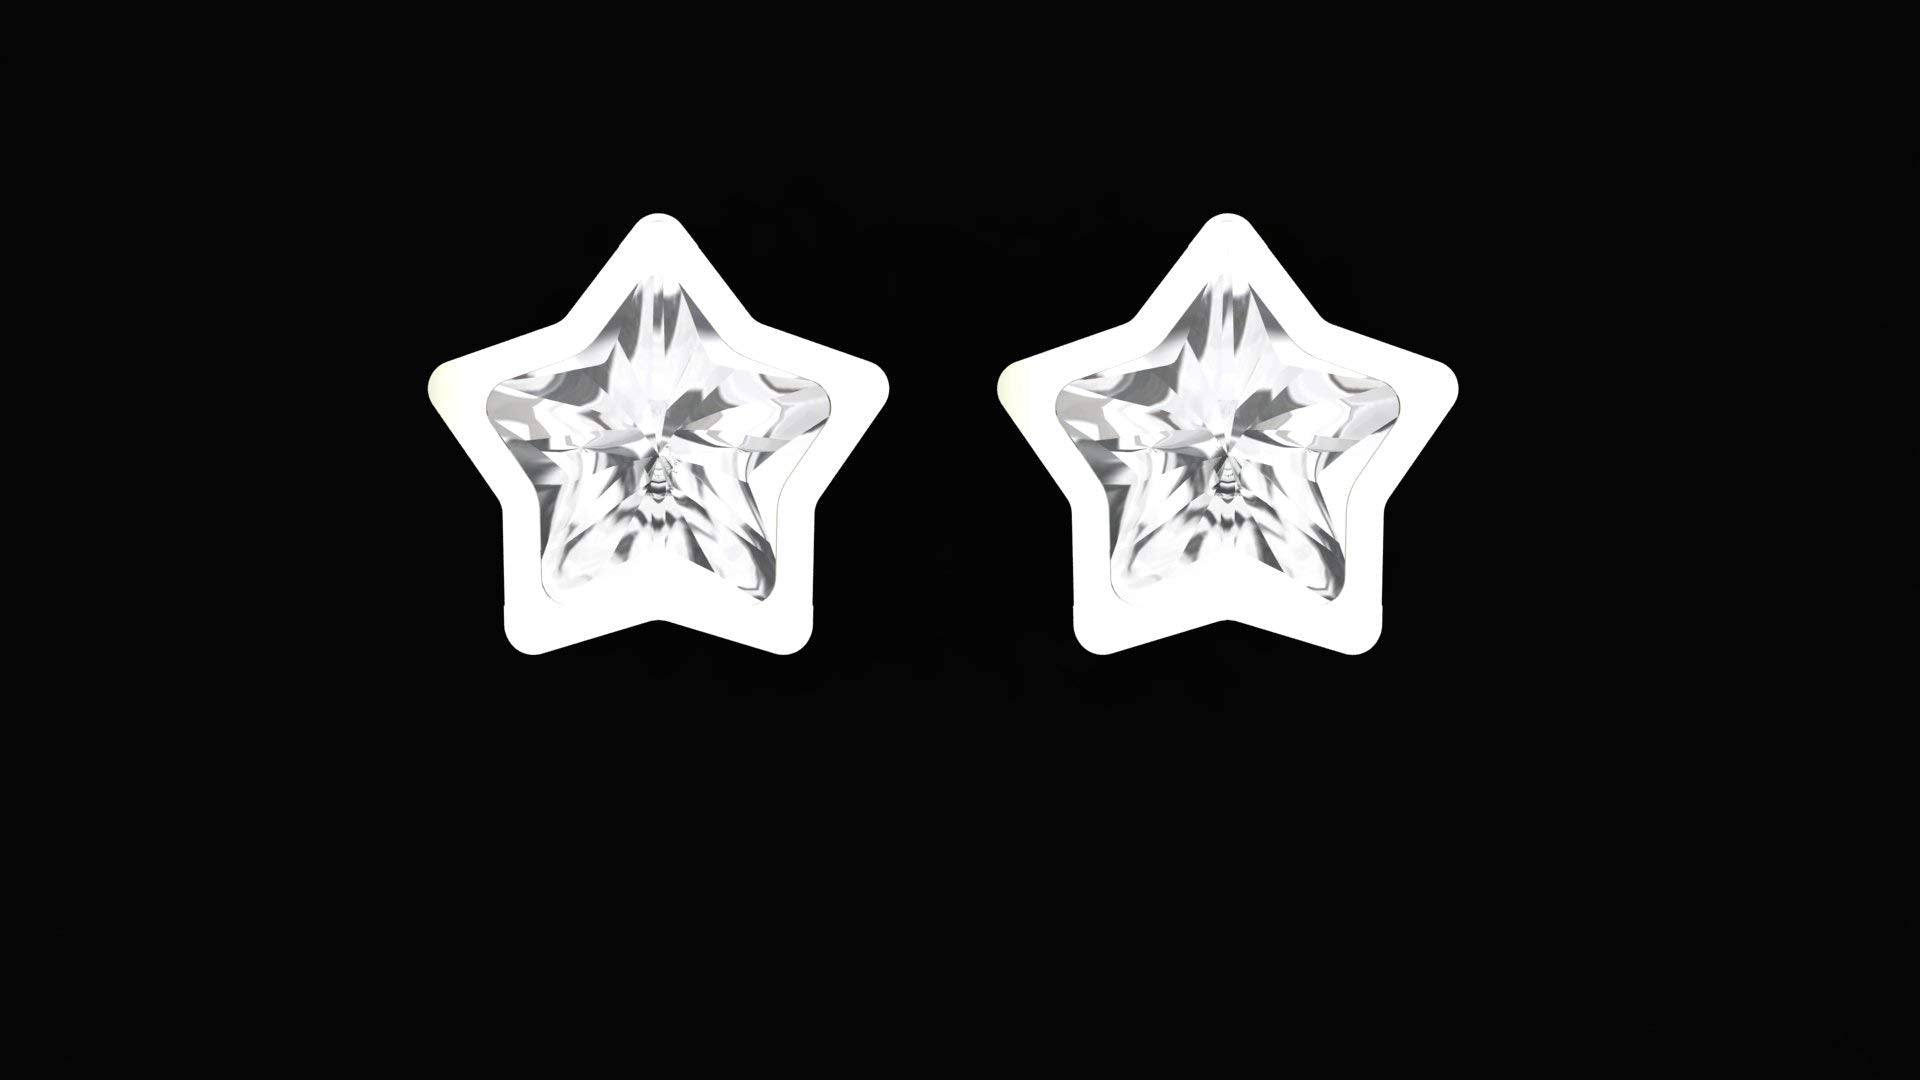 SJ SHUBHAM JEWELLERS Rehti 925-92.5 Sterling Silver Star Cut Black Real Cubic Zirconia Fashion Stud Tops Earrings For Men,Women,Children,Boys and Girls - JewelYaari By Shubham Jewellers